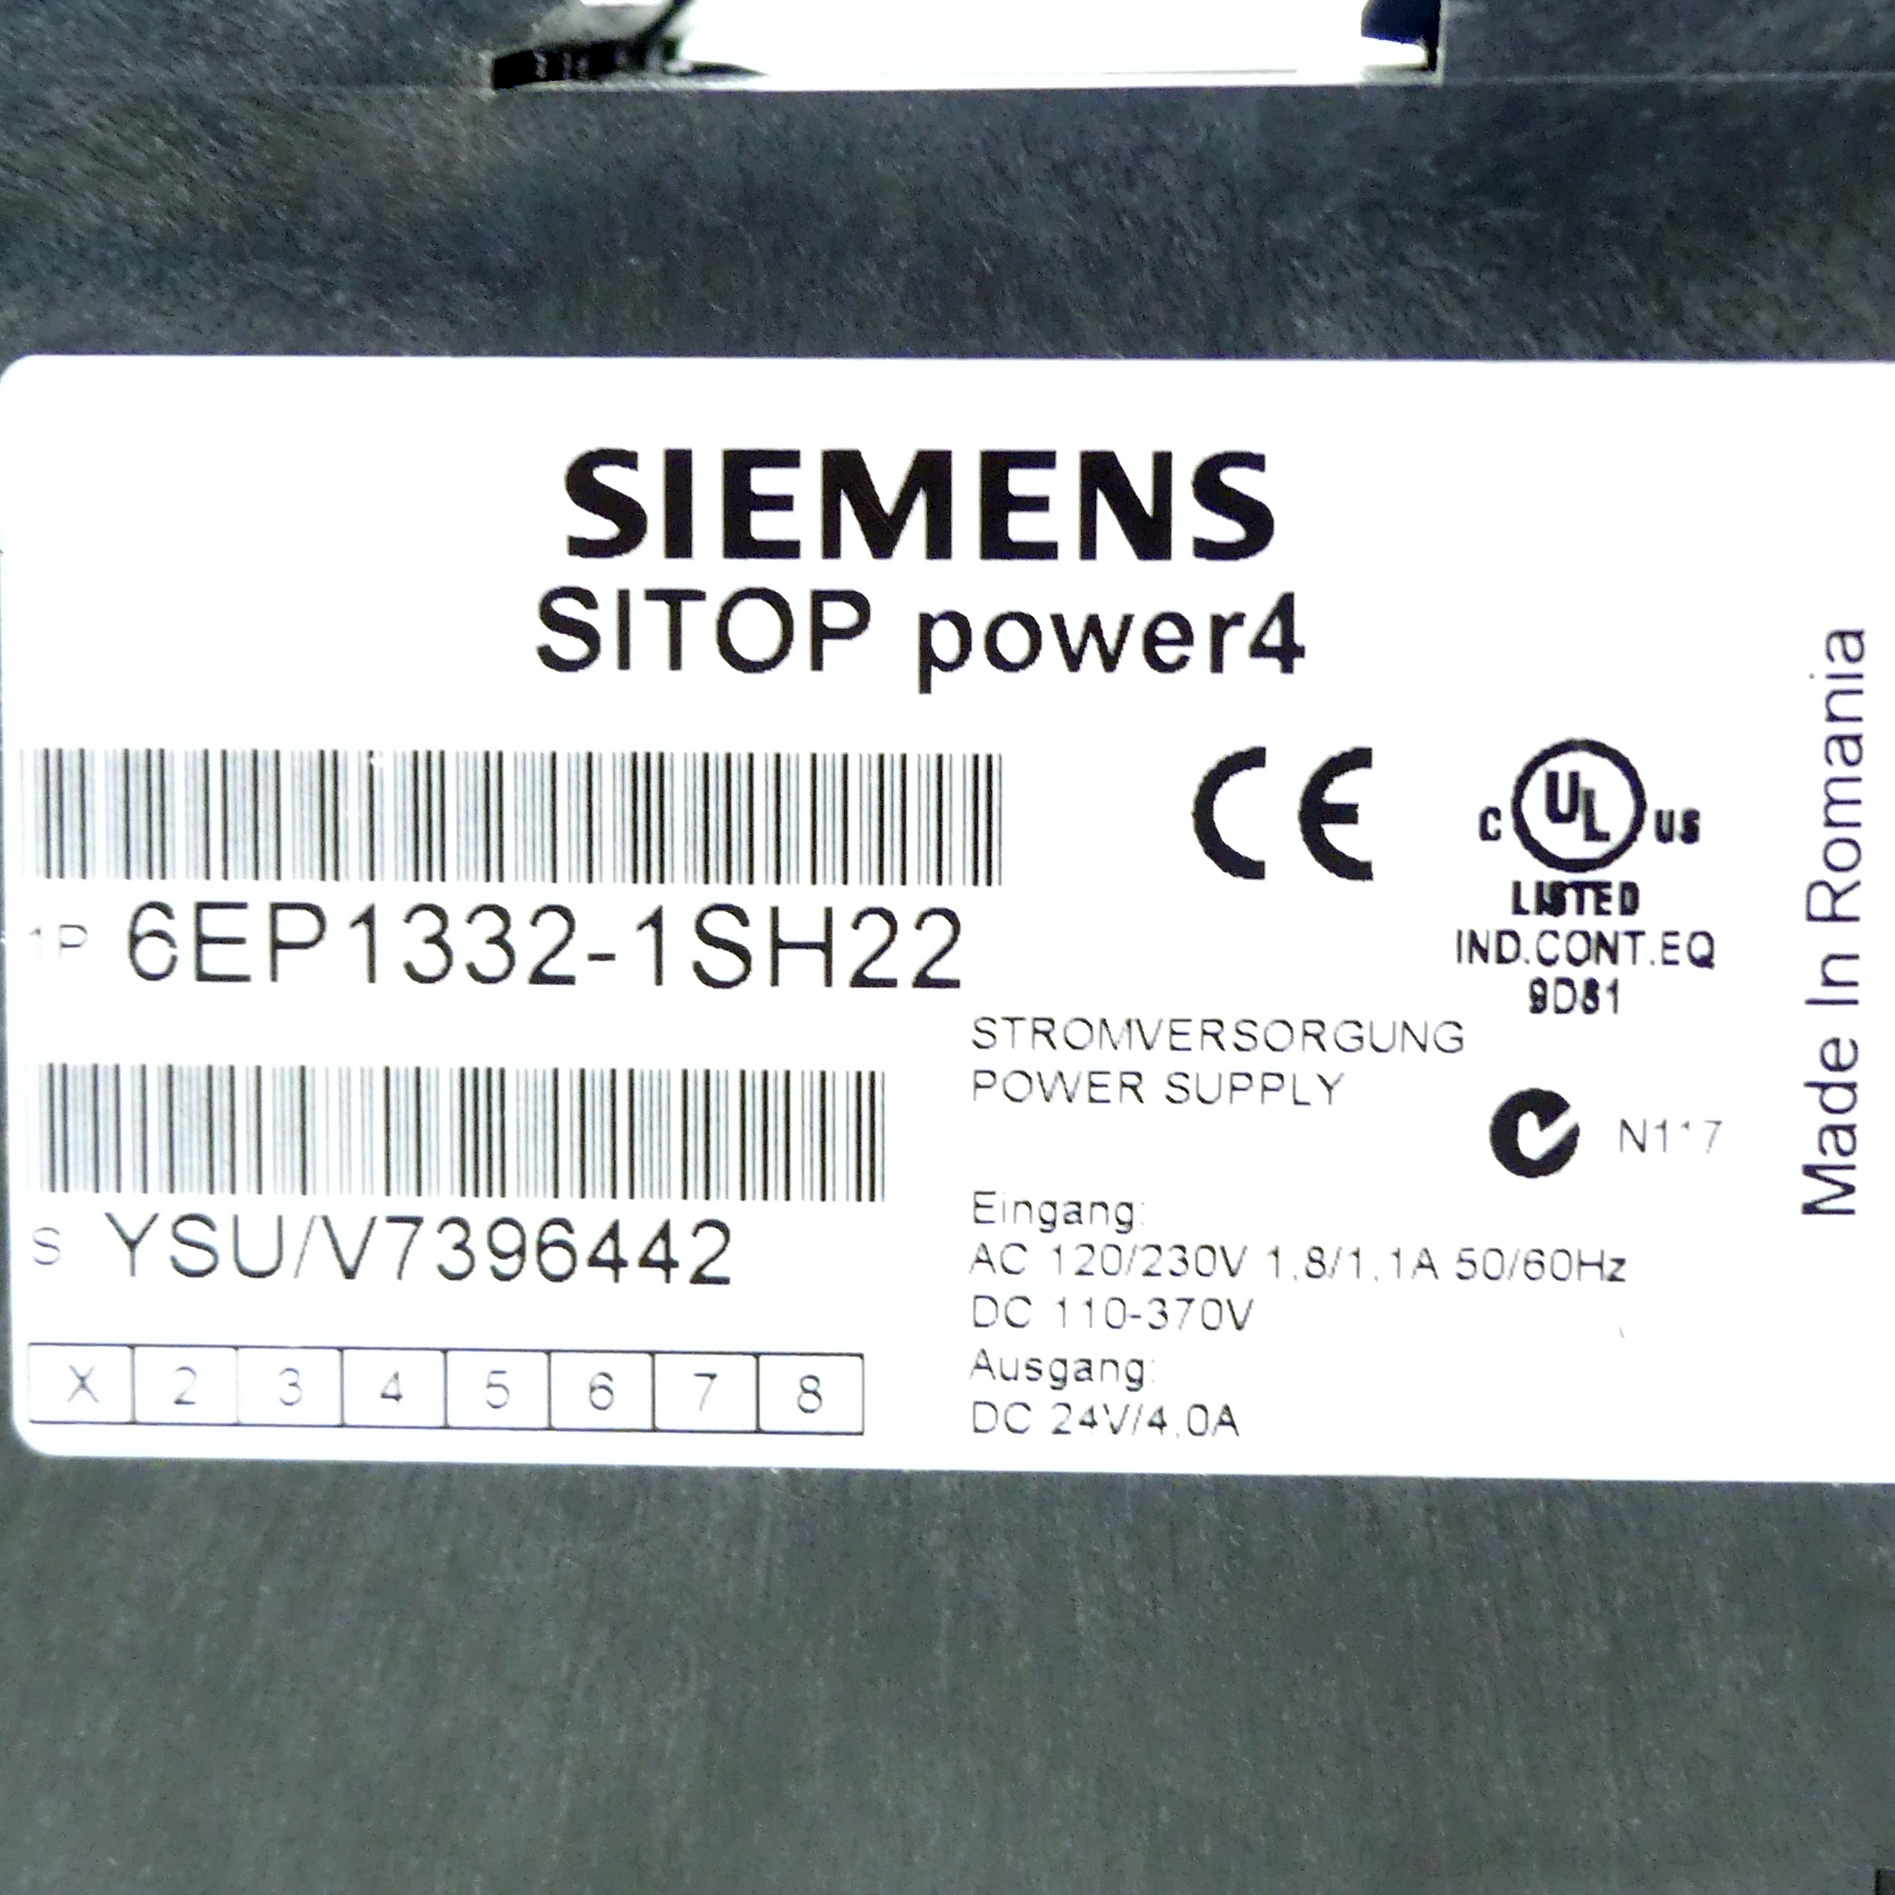 Power supply 6EP1 332-1SH22 